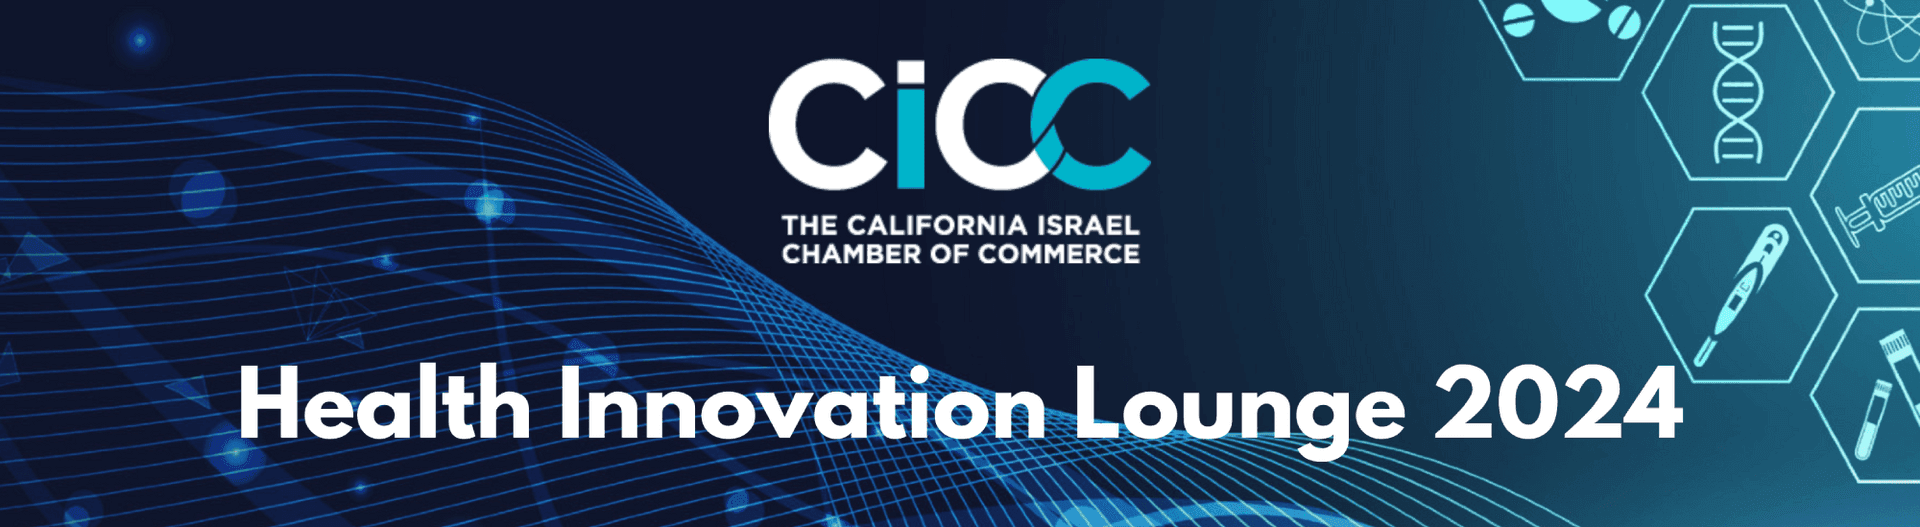 California Israeli Chamber of Commerce